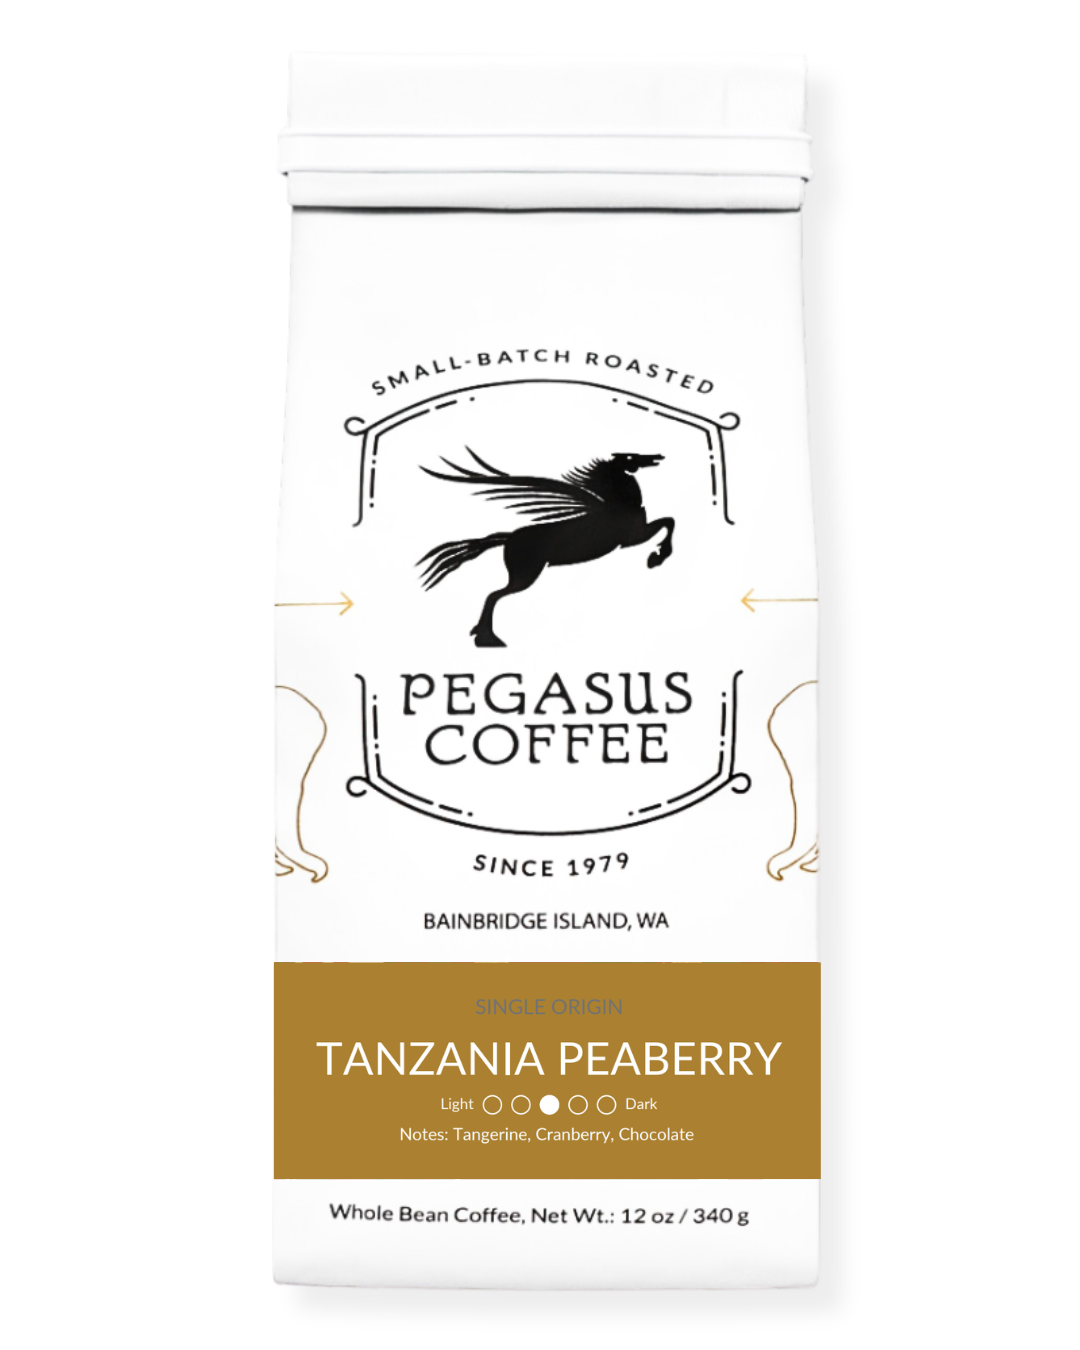 Tanzania Peaberry Pegasus Coffee